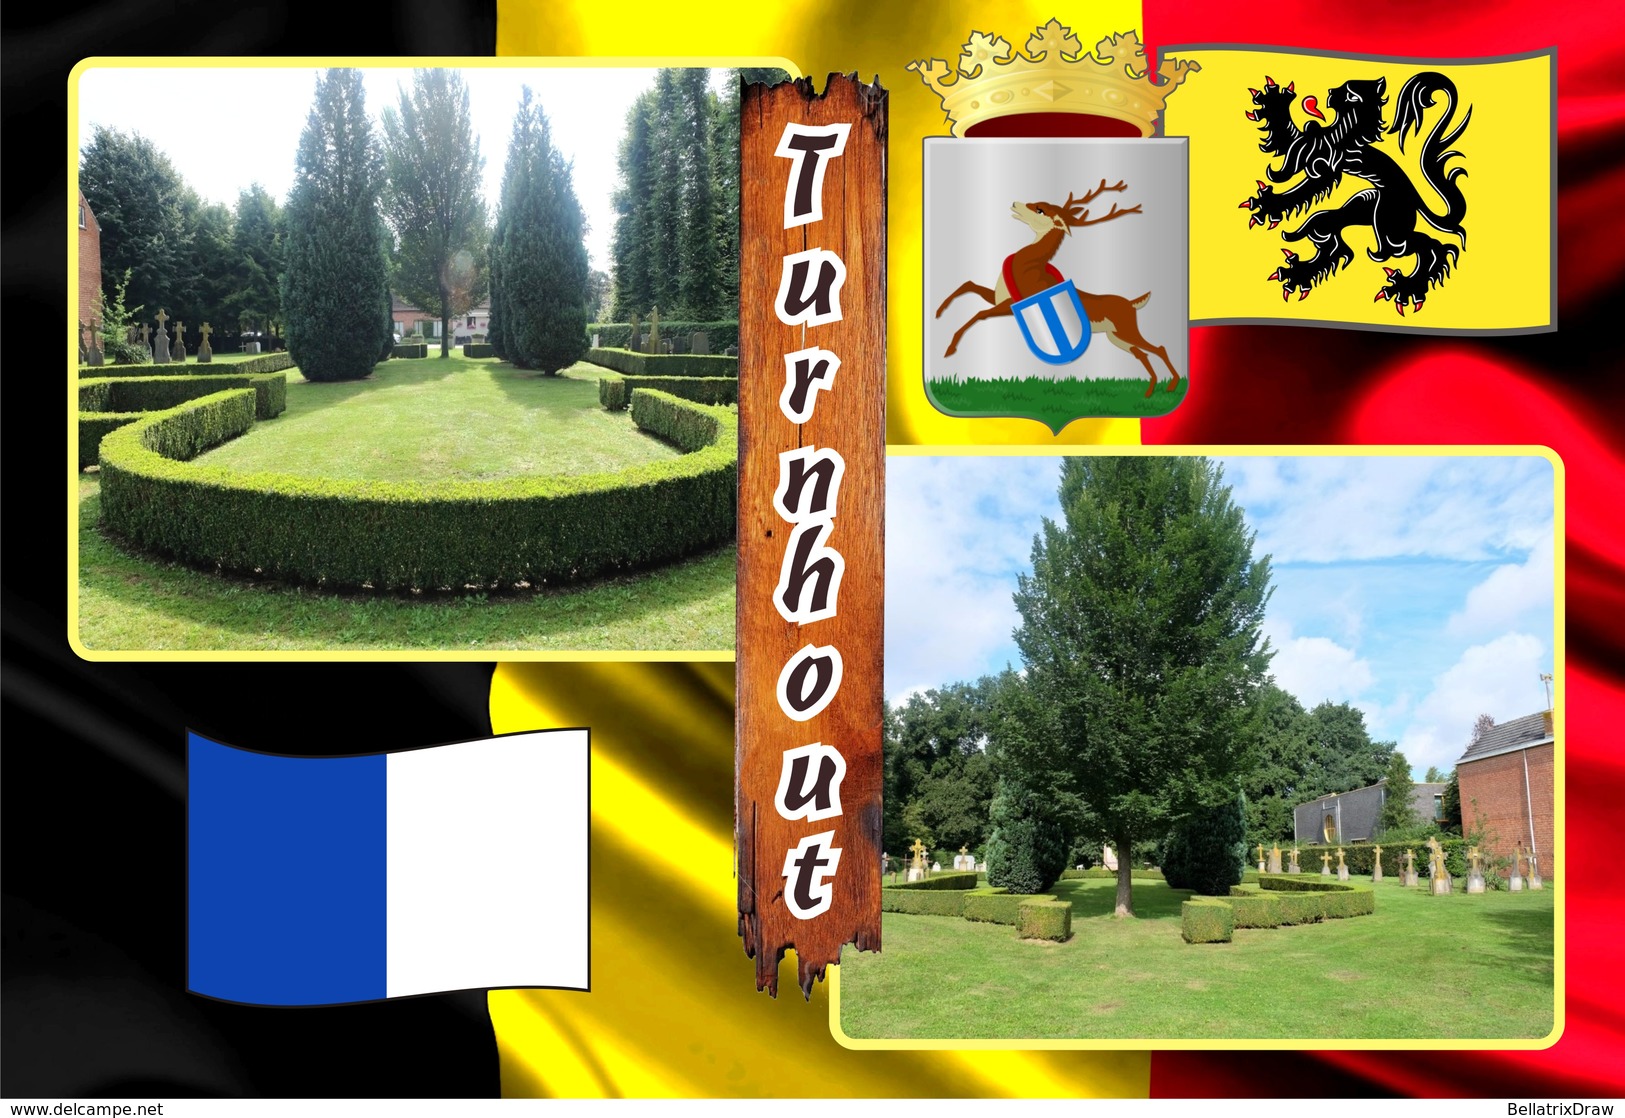 Postcards, REPRODUCTION, Municipalities of Belgium, Turnhout, duplex 188 to 243 - set of 56 pcs.